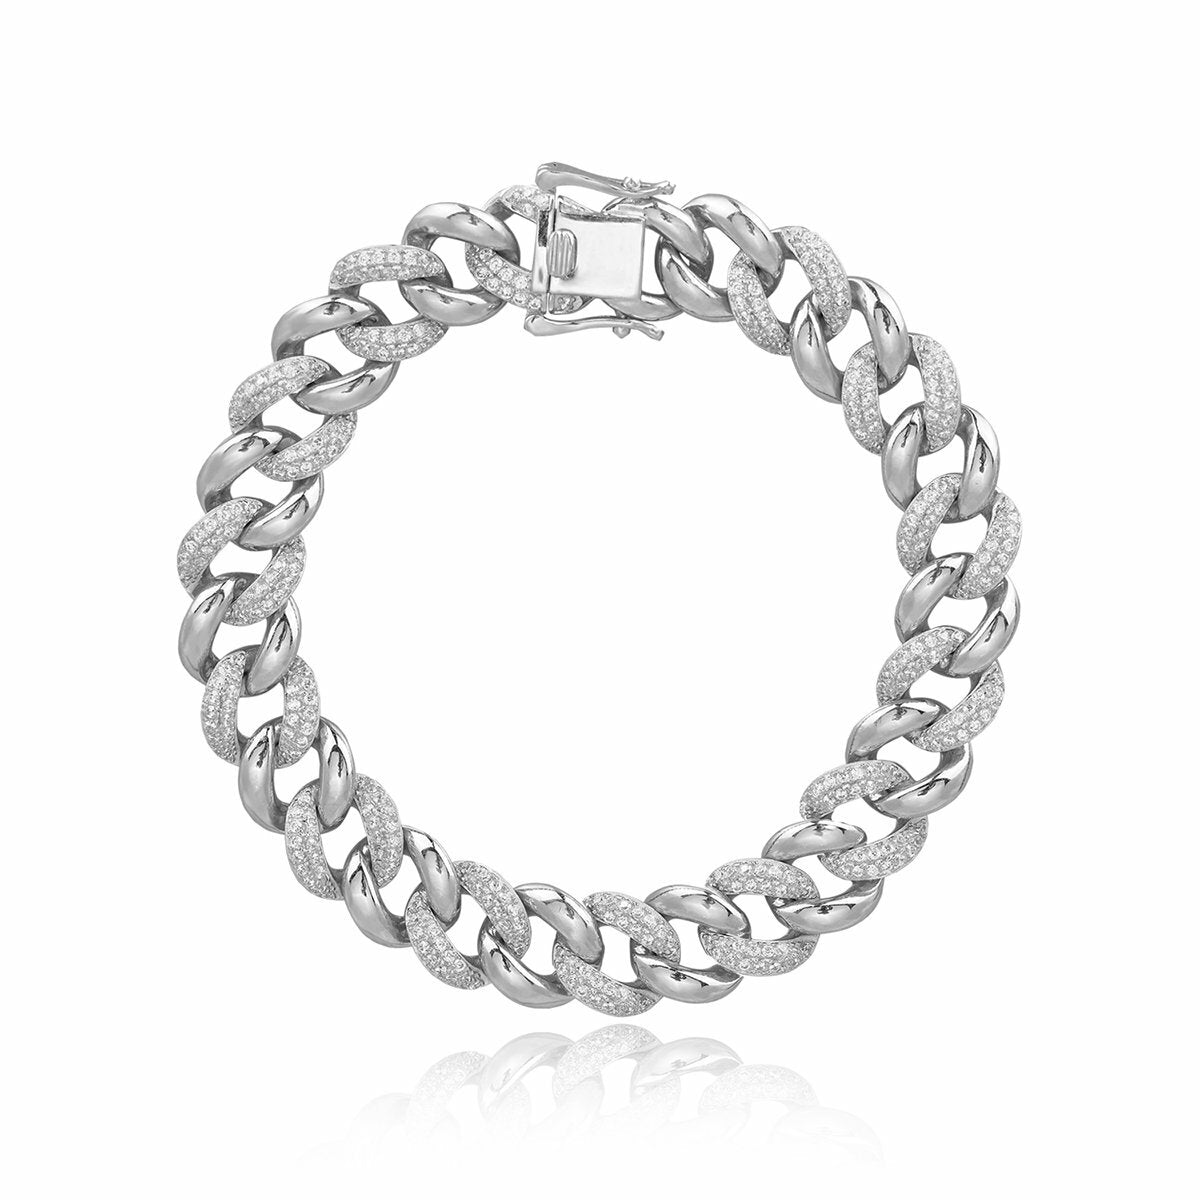 Groumette Bracelet in Silver Mabina Gioielli 533380M 